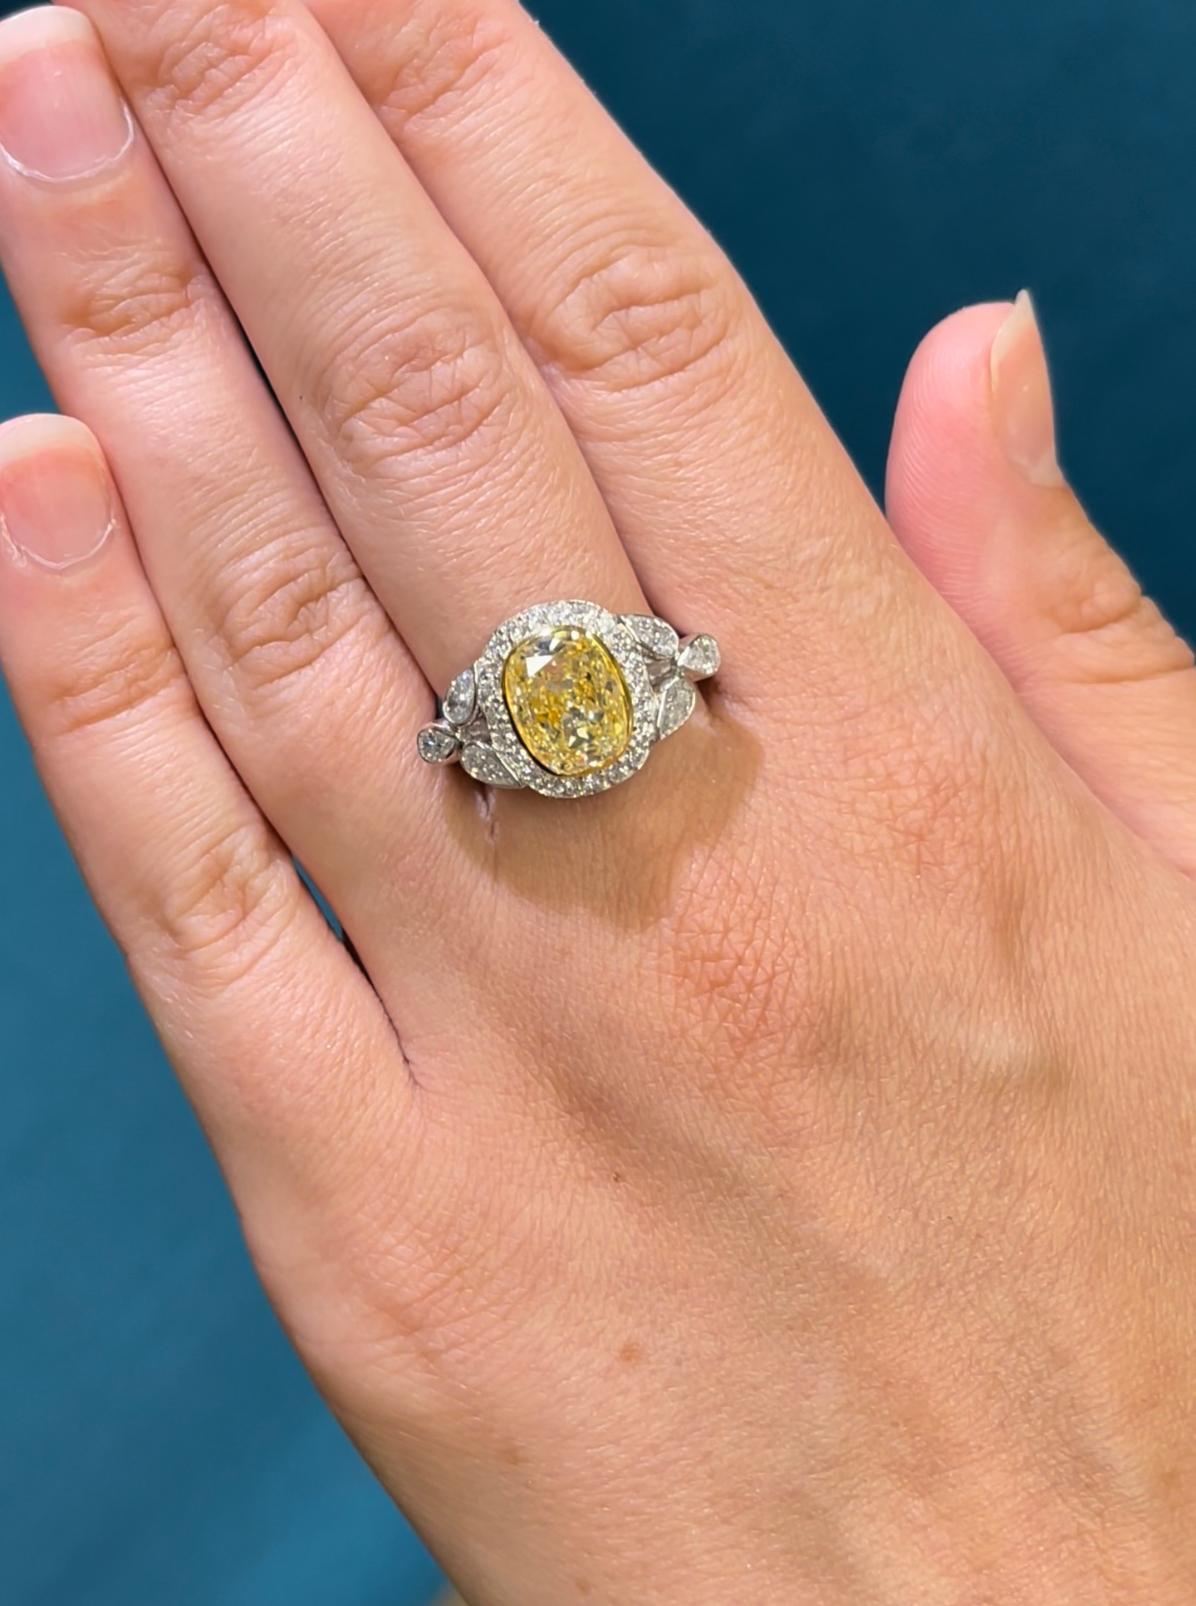 Light Yellow Diamond ring with EGL USA certificate, no.400148811D. Center stone: 3.03ct Cushion Modified Brilliant cut Light Yellow VS1 diamond, 9.90 x 7.40 x 5.16 mm. Side stones: 6 Pear shape diamonds and 38 Brilliant Round cut diamonds: 1.35ct